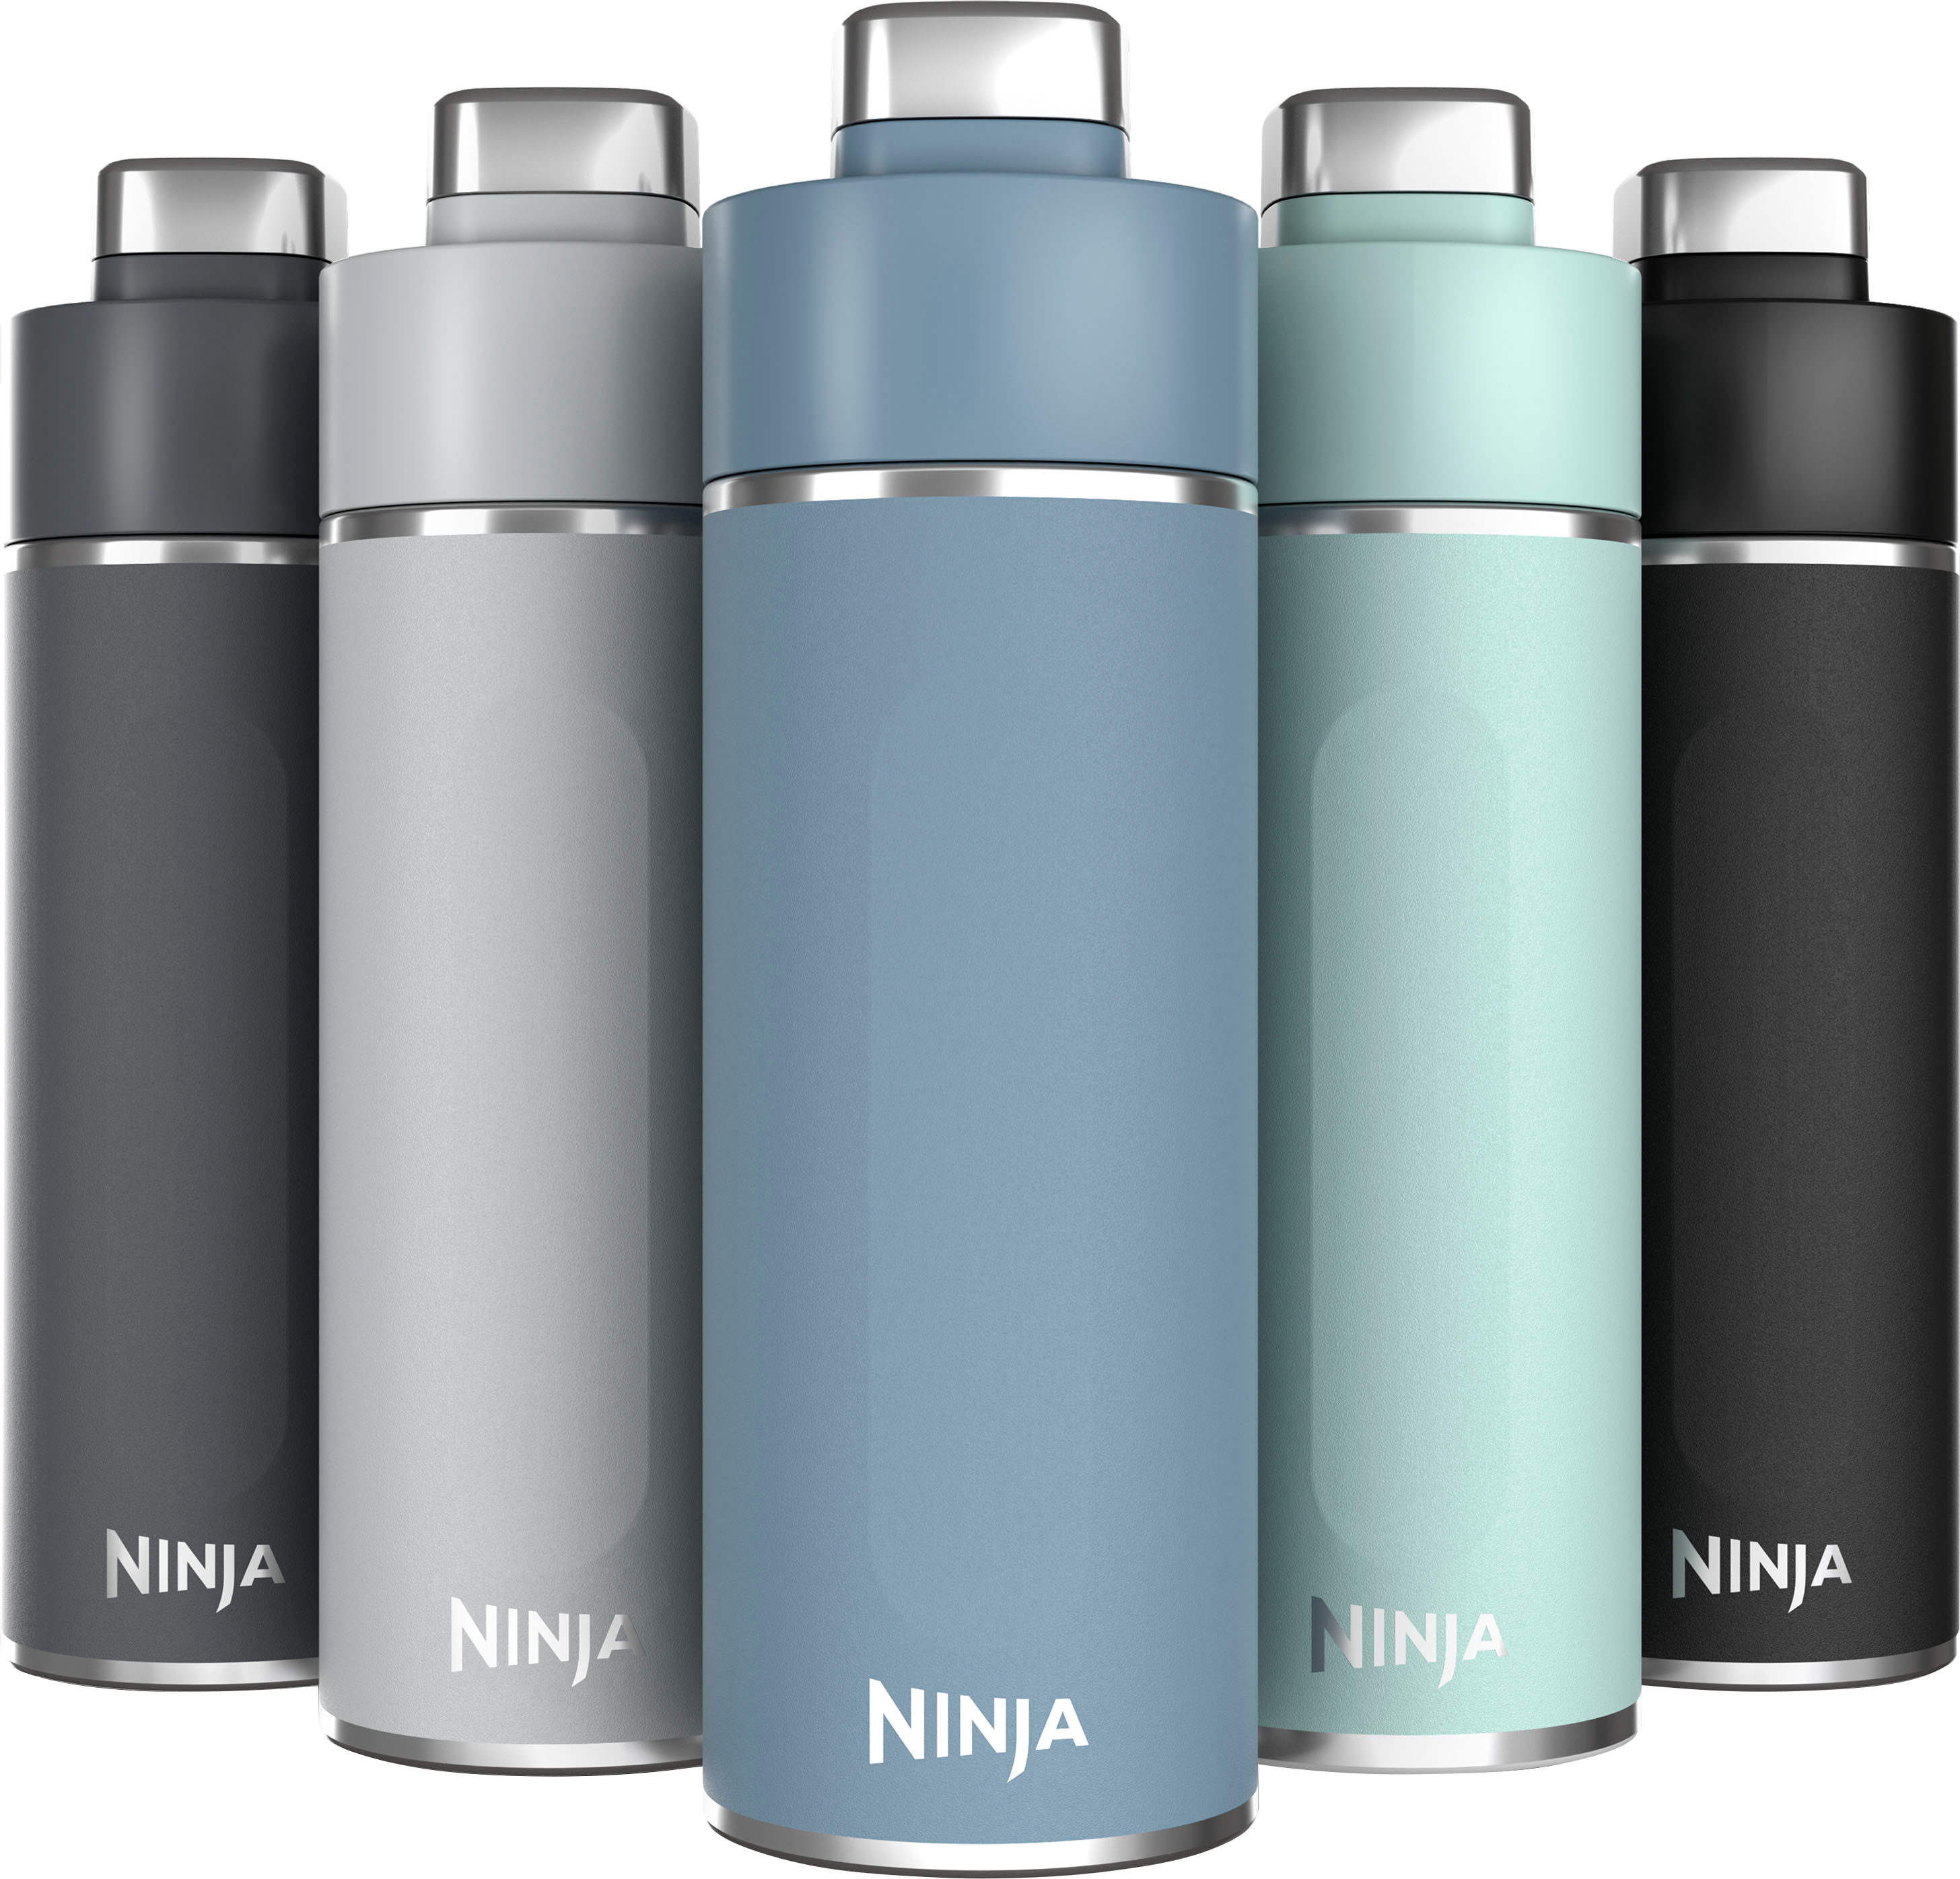 🚨 NEW NINJA ALERT 🚨 Meet the bottle engineered for carbonated drink, ninja thirtsi